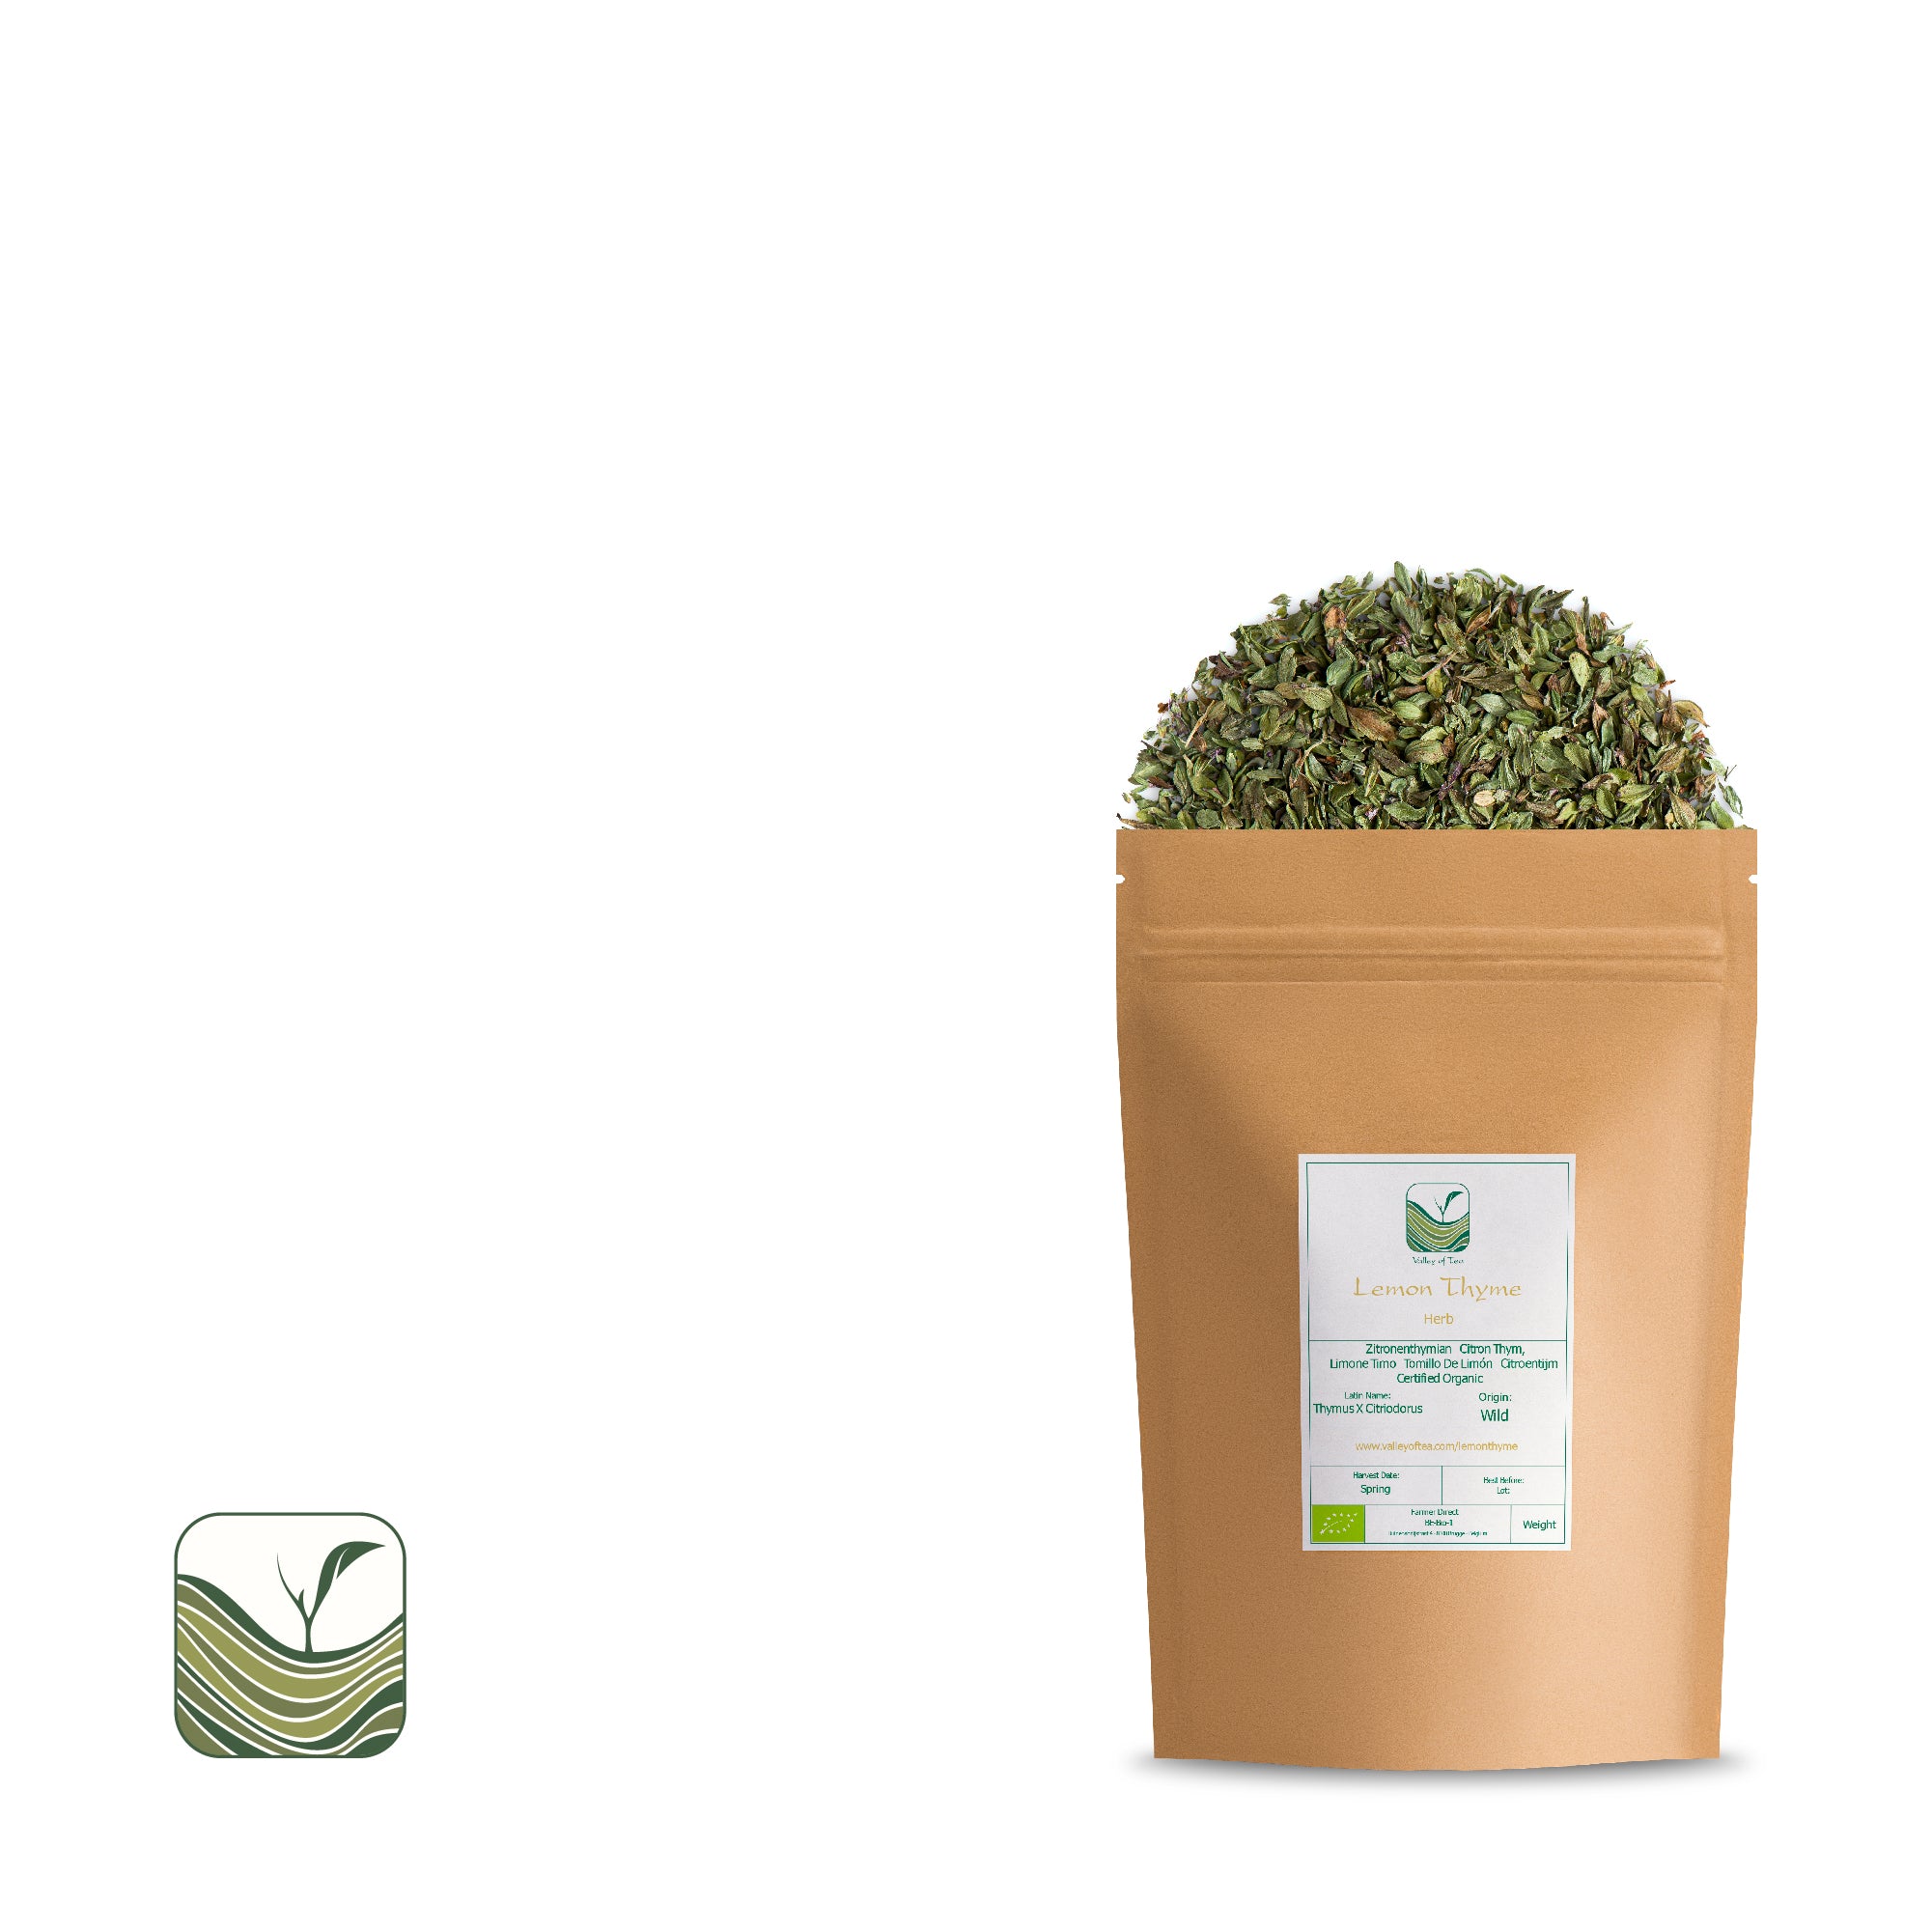 Thyme, lemon, & eucalyptus herbal tea: thyme lemon APRÈS-SKI herbal tea